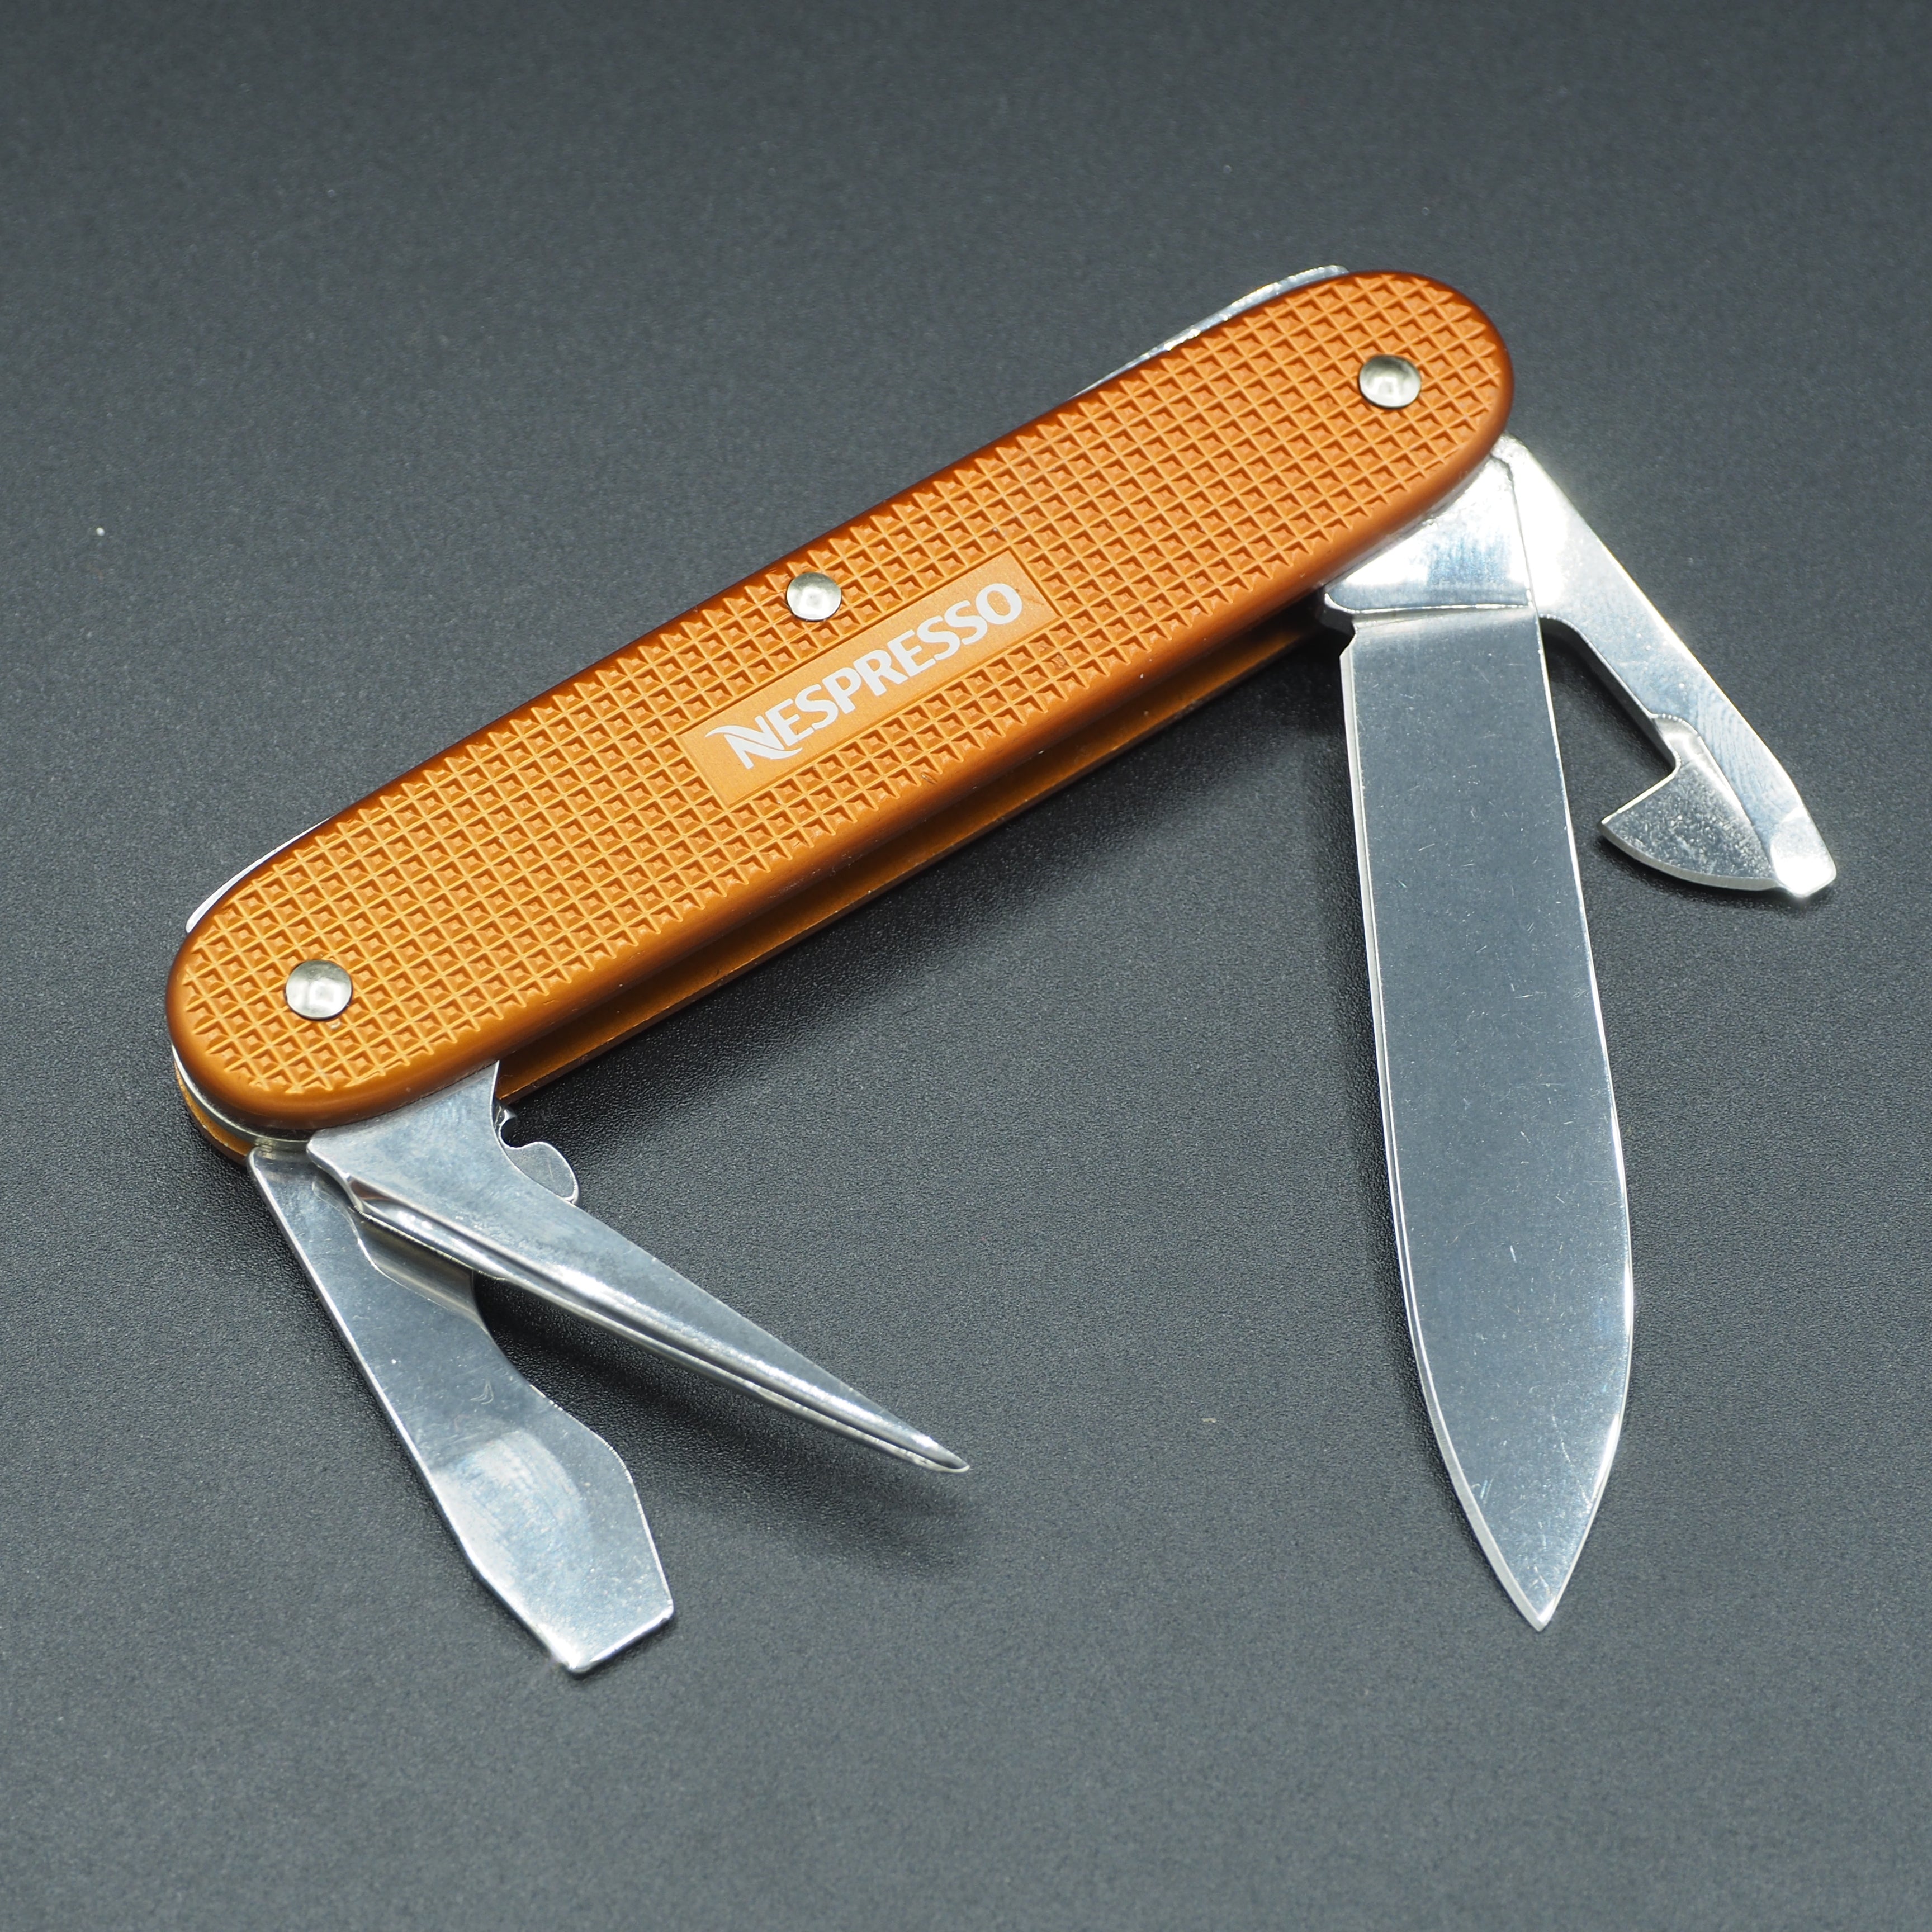 NEW KNIVES – The Sharp Knife Club